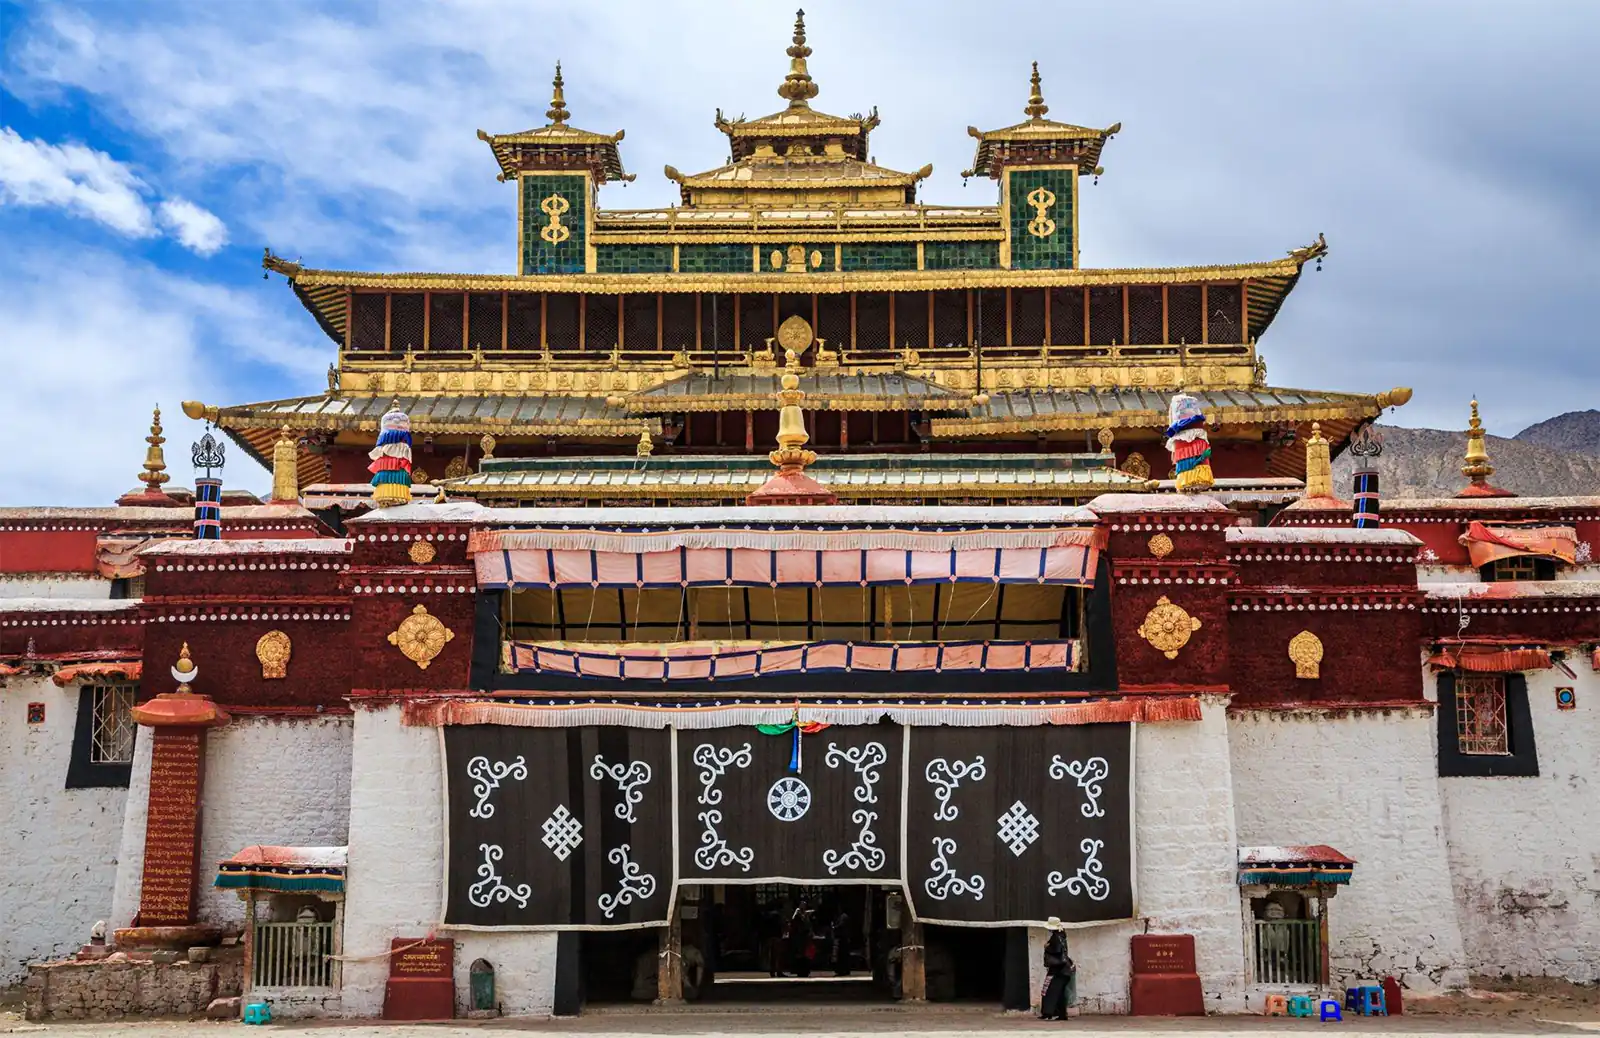 Samye Monastery - First monastery in Tibet